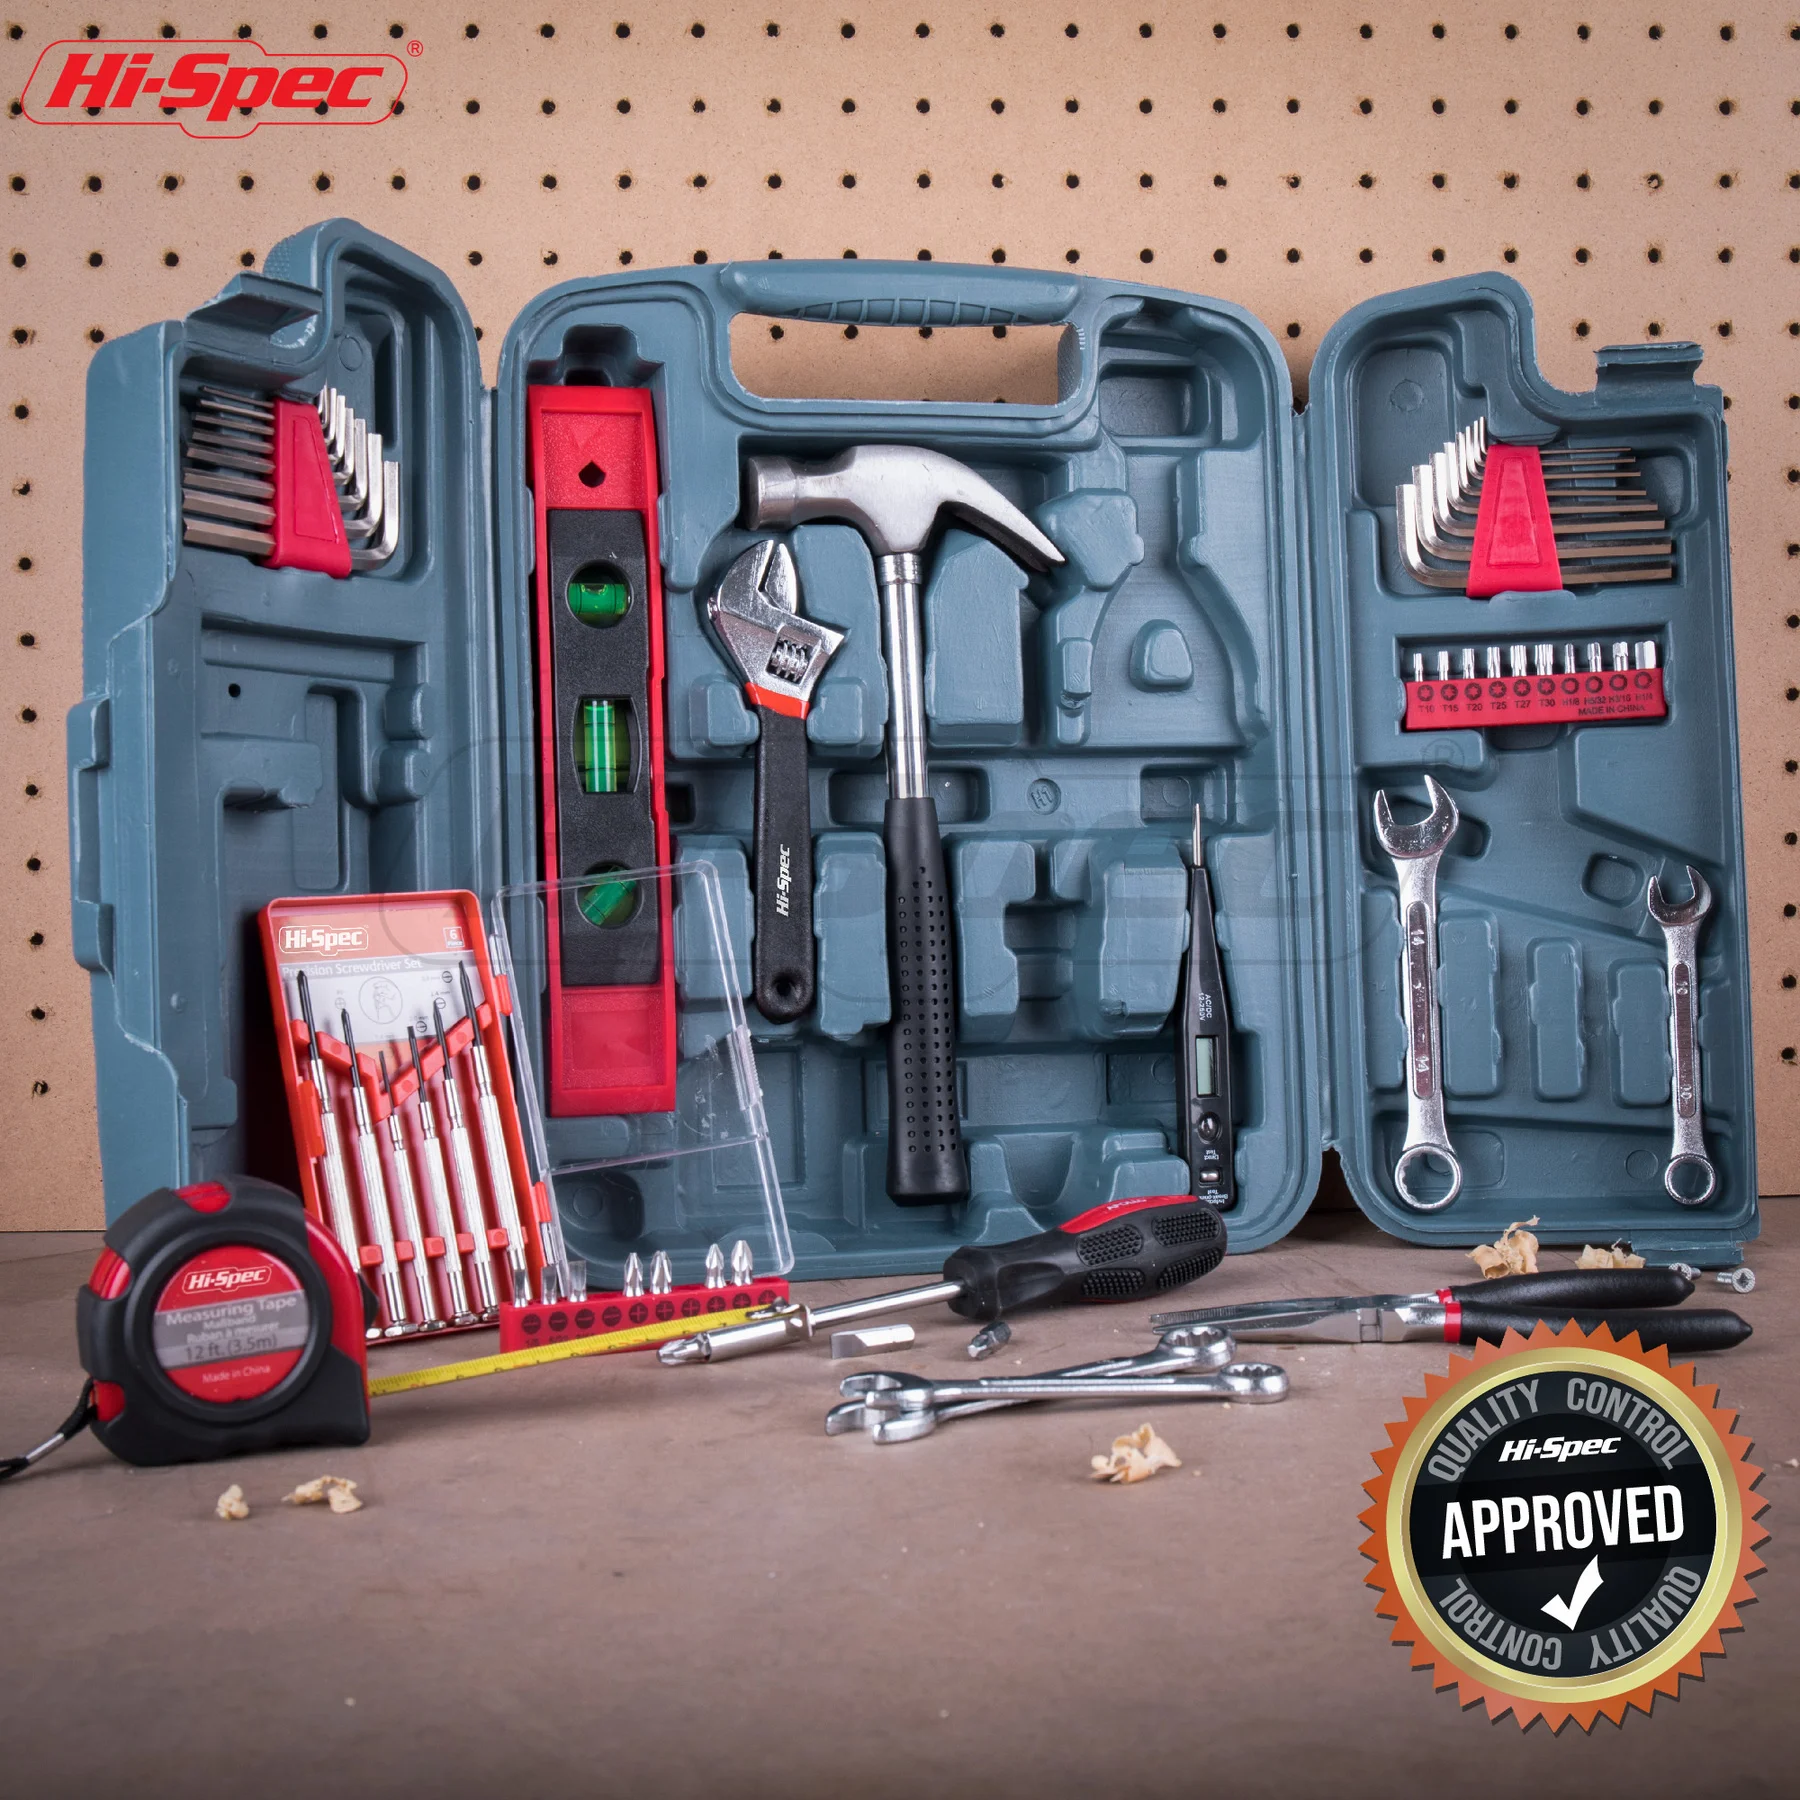 

Hi-Spec 53pc Hand Repair Tool Set General Household DIY Tool Kit Screwdriver Hammer Pliers Wrench Hand Tools in Tool Box Case